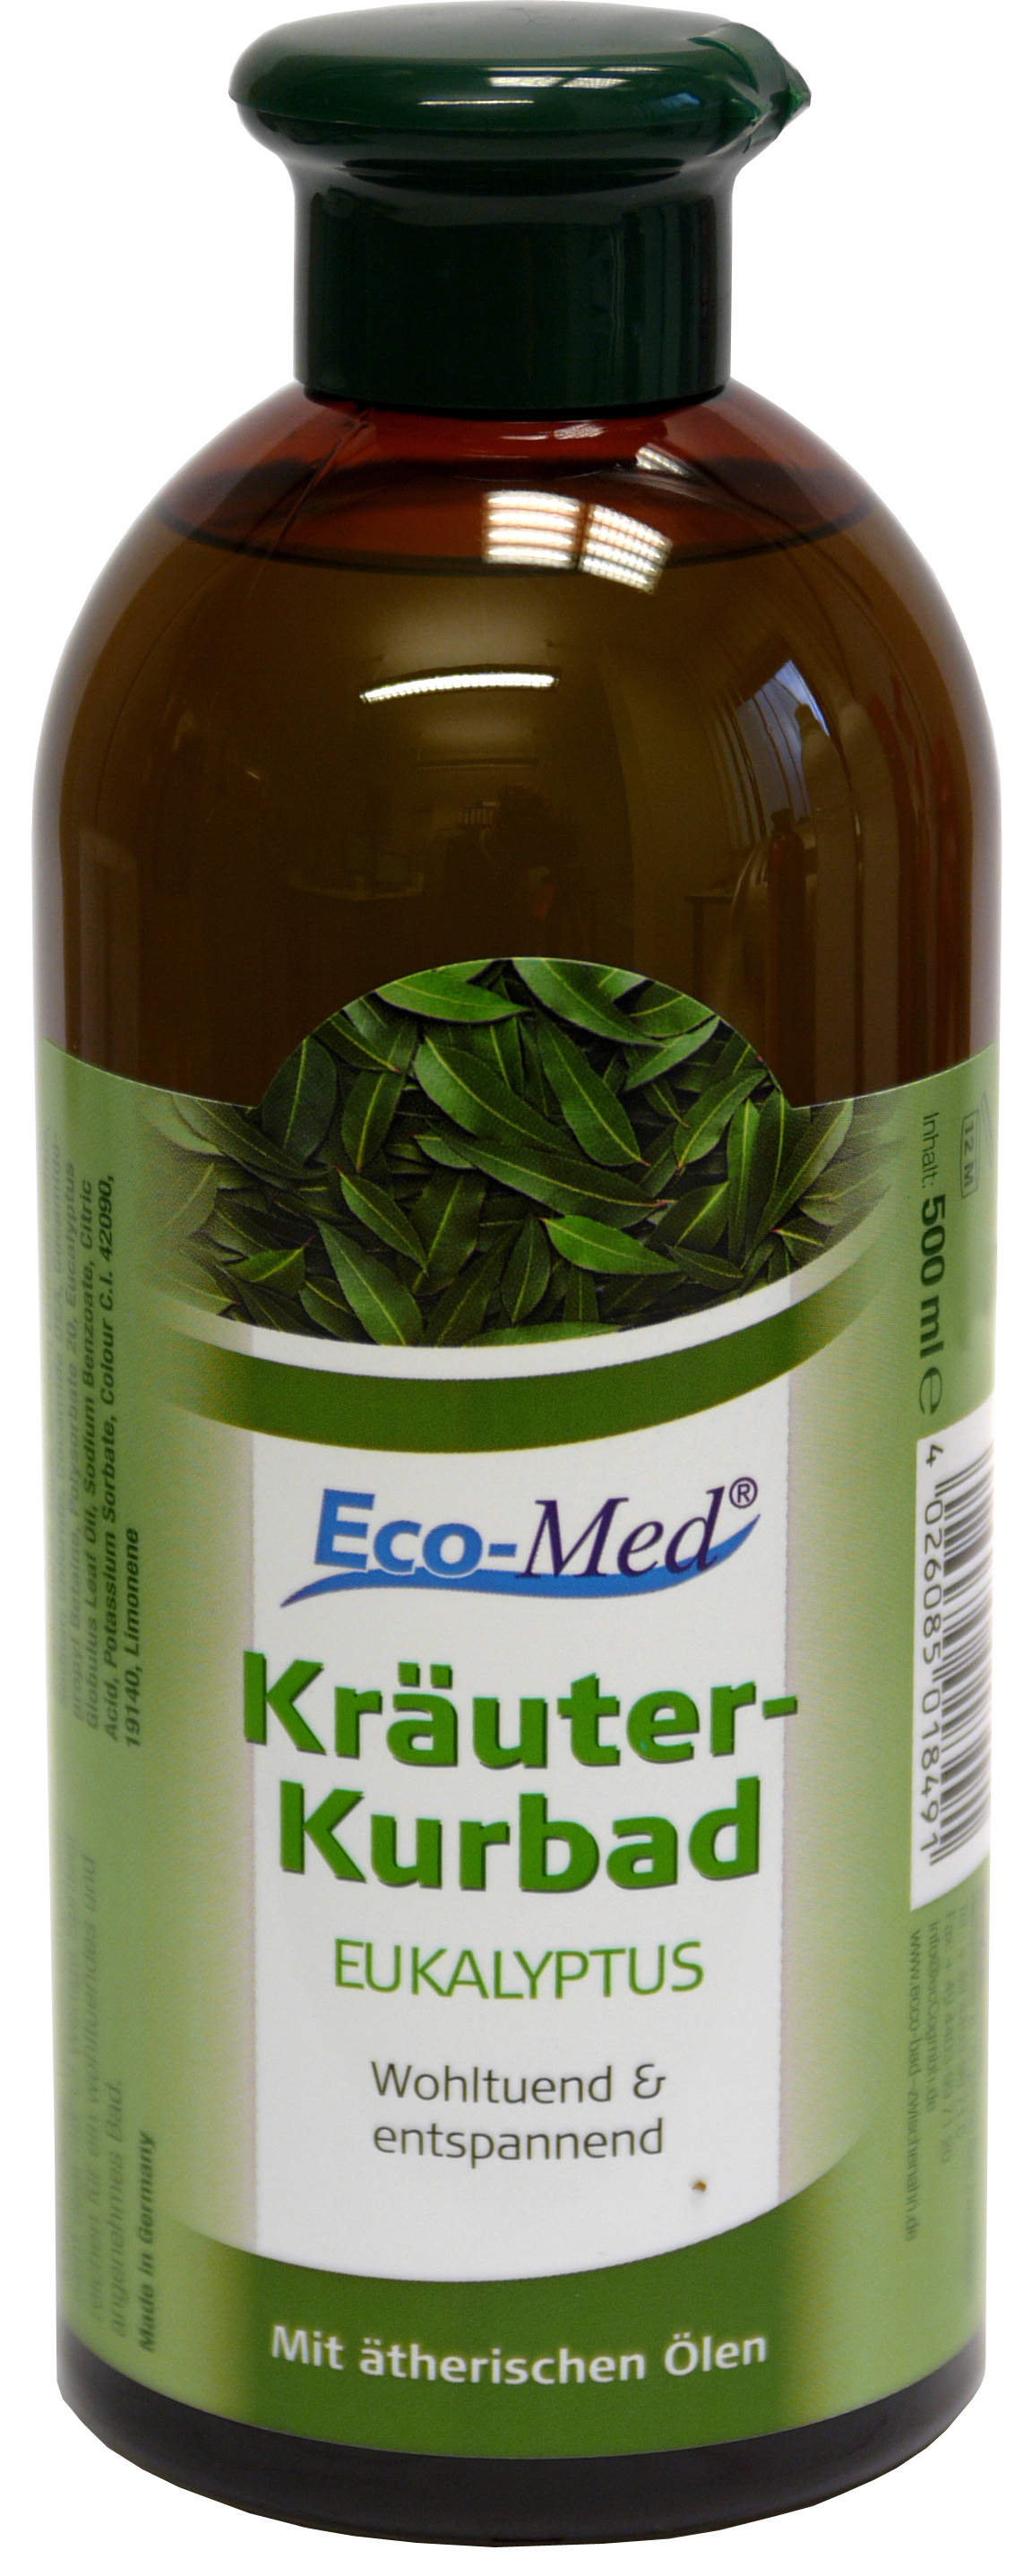 01849 - Eco-Med Kräuterkurbad 500 ml Eukalyptus